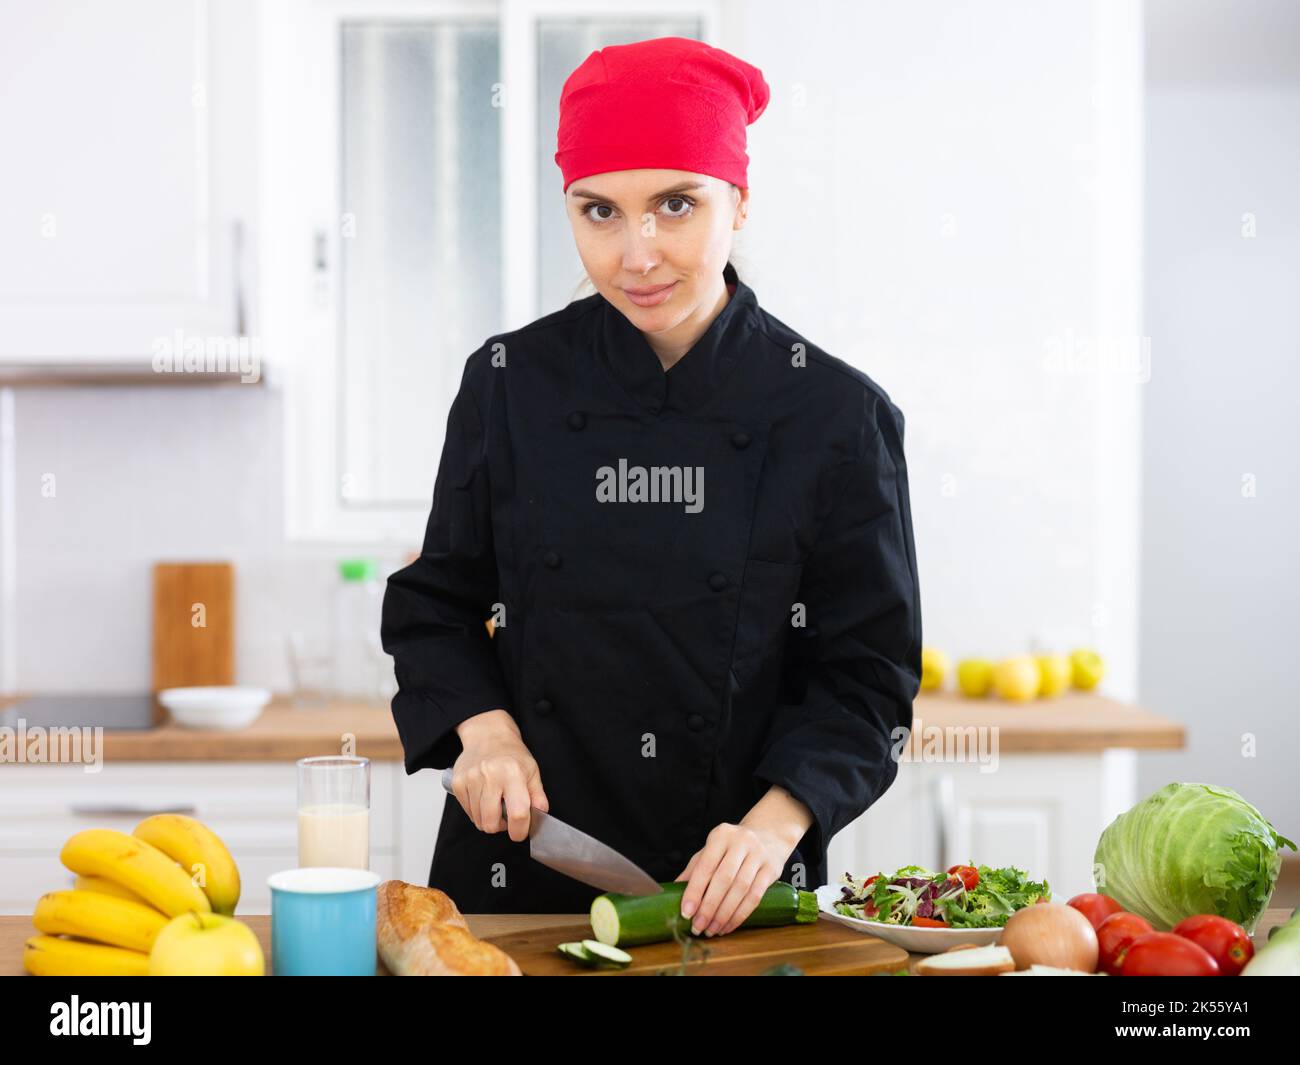 Smiling female chef in black uniform preparing vegetable salad in private kitchen Stock Photo